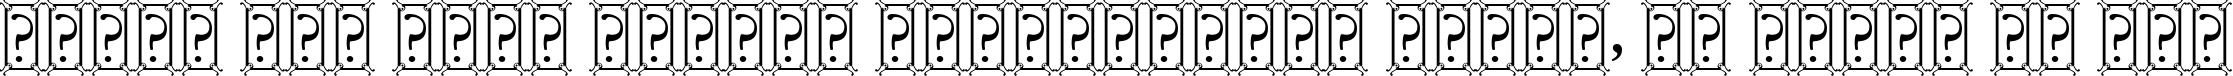 Пример написания шрифтом Plantagenet Cherokee текста на русском